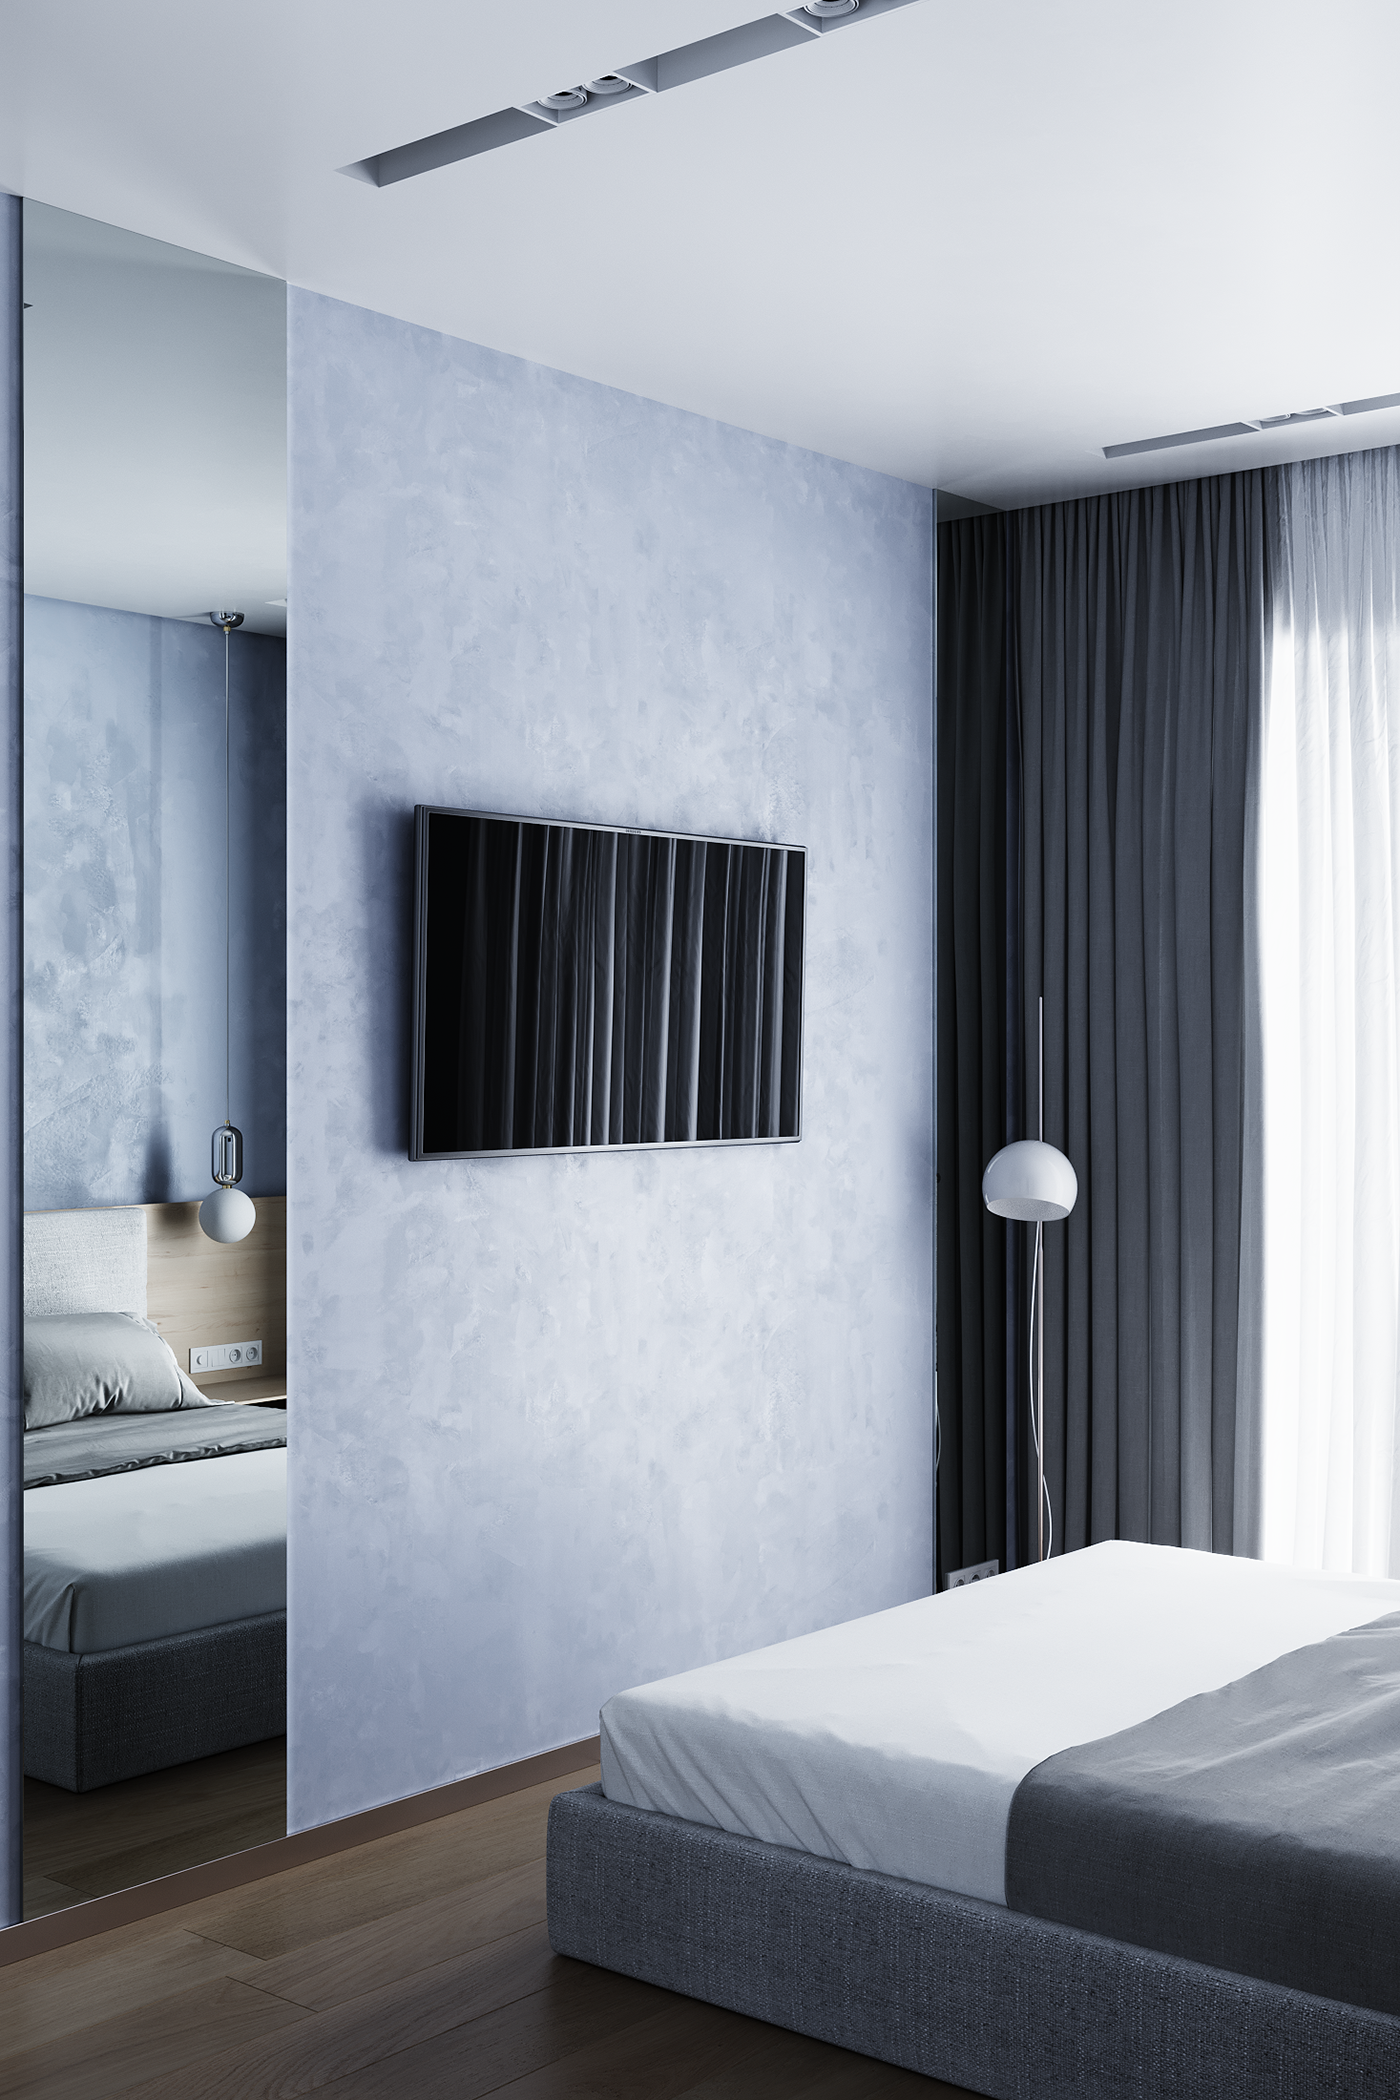 bedroom minimalist Interior bedrooomdesign минимализм спальня дизайн спальни современный contemporary bedroom design